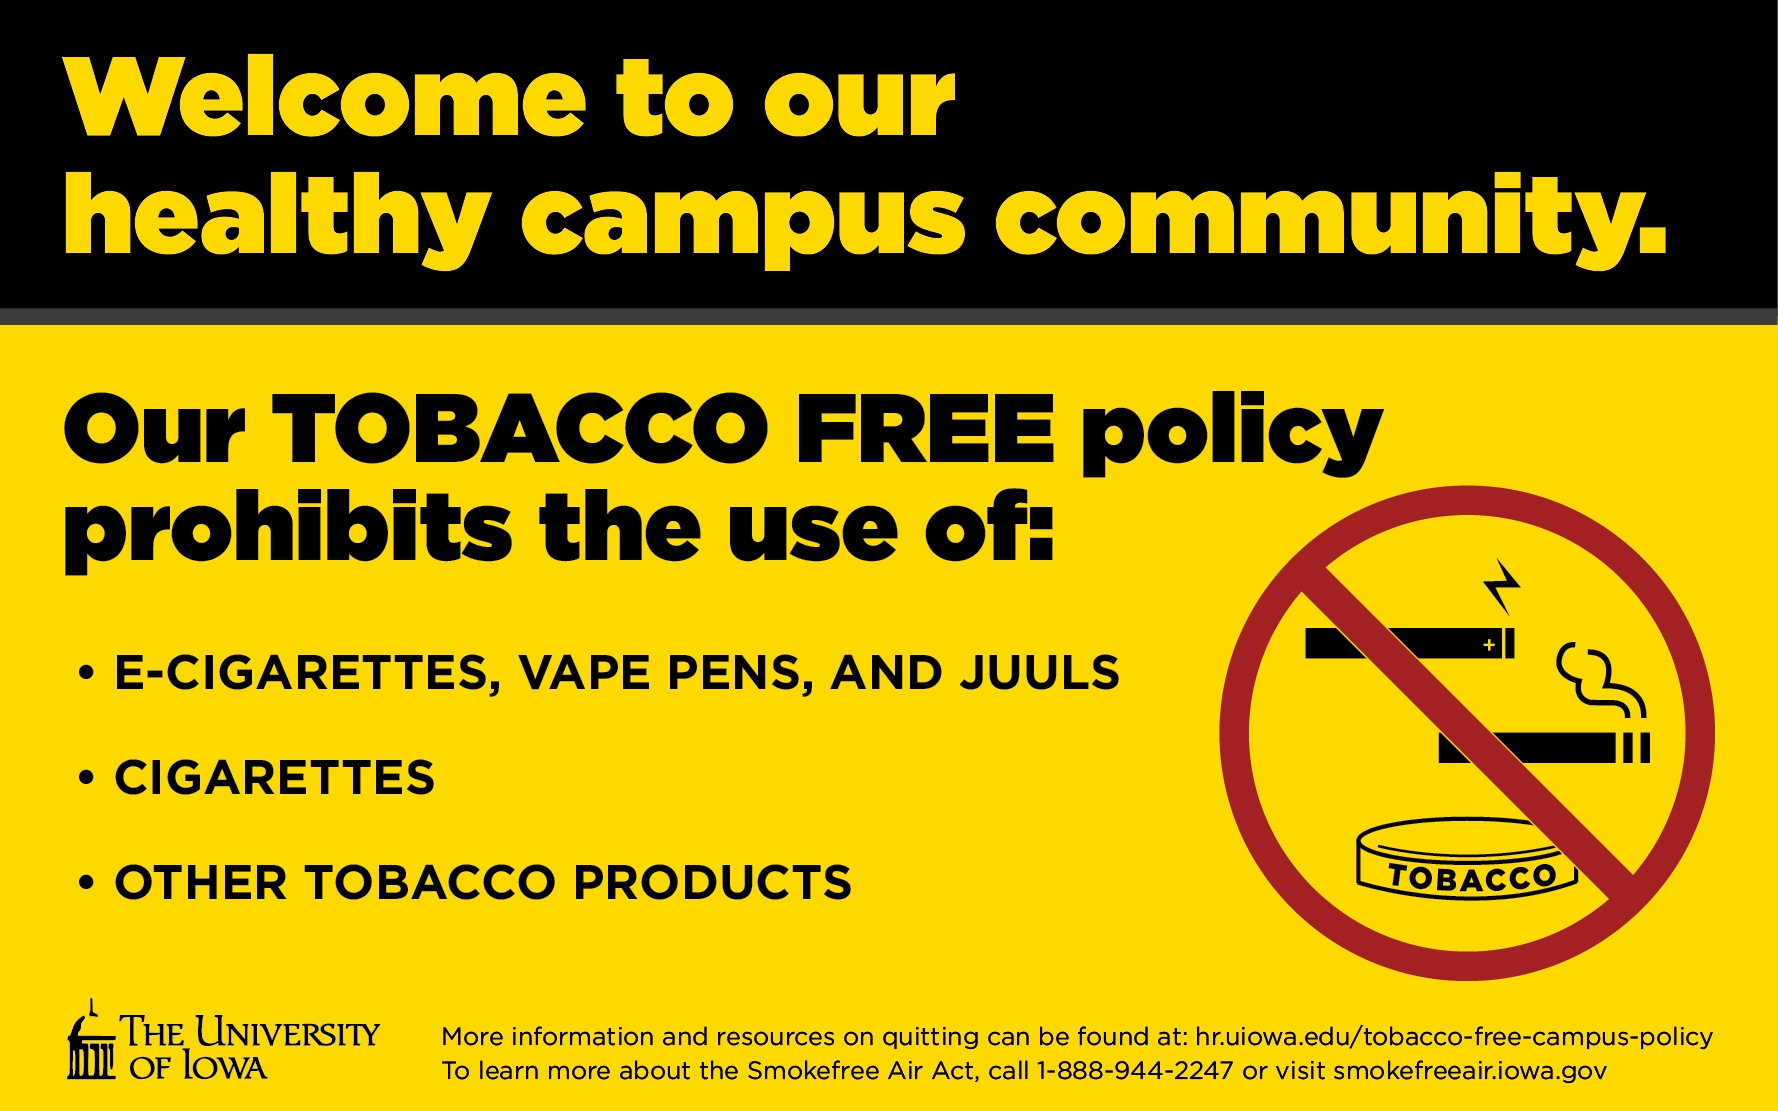 University of Iowa tobacco policy